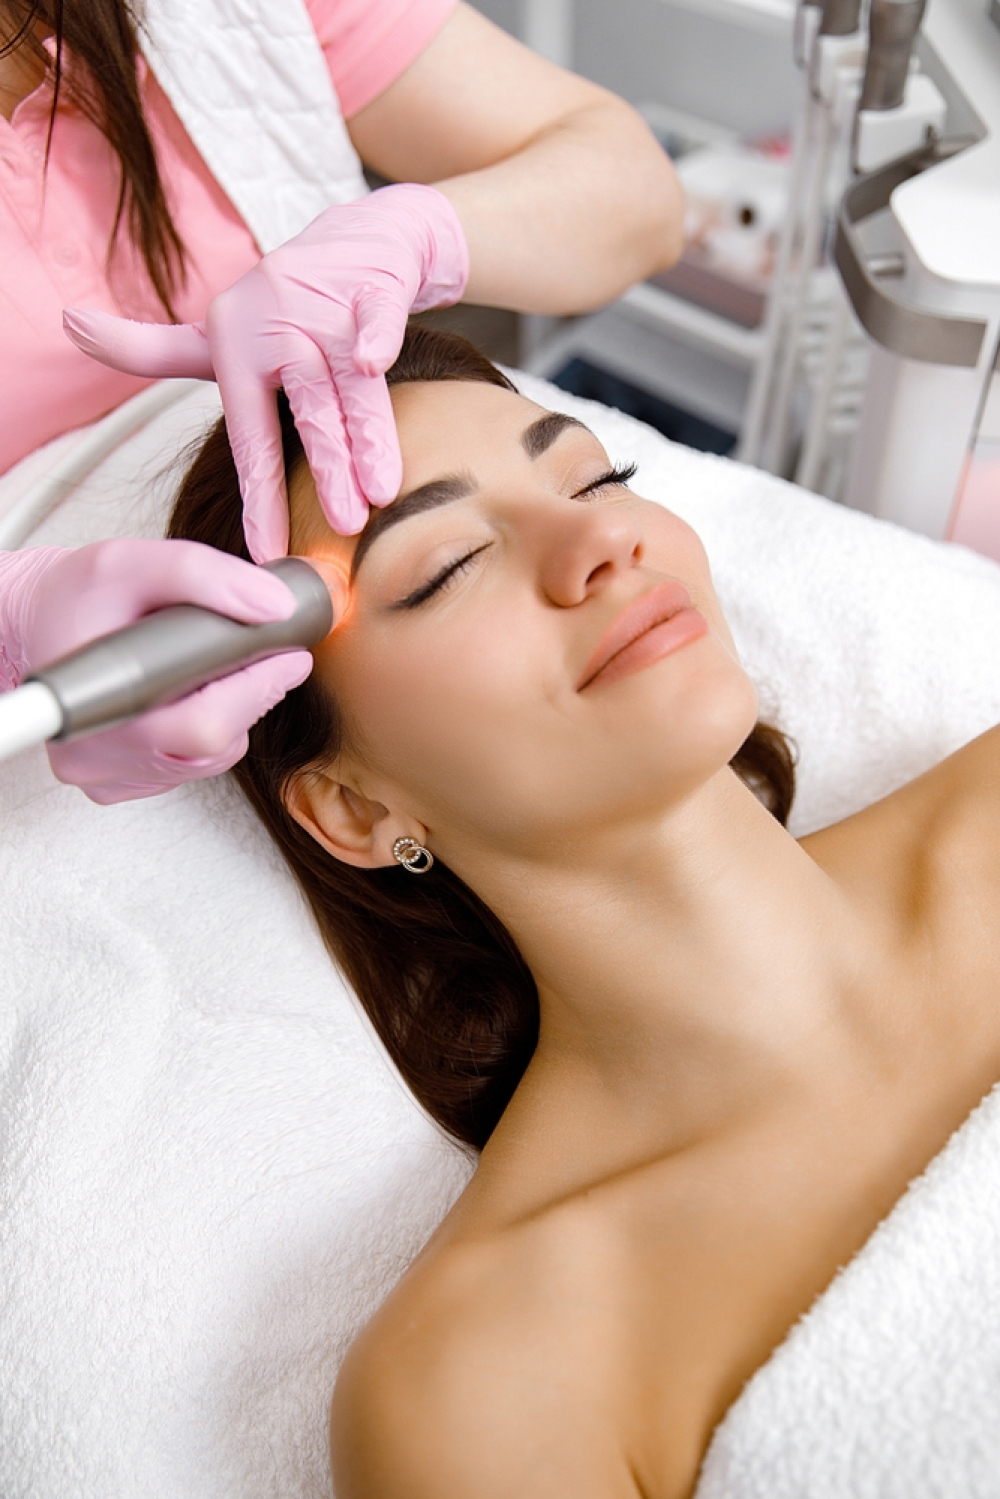 facial laser treatment in medical spa - U R Royalty - Cypress, Texas